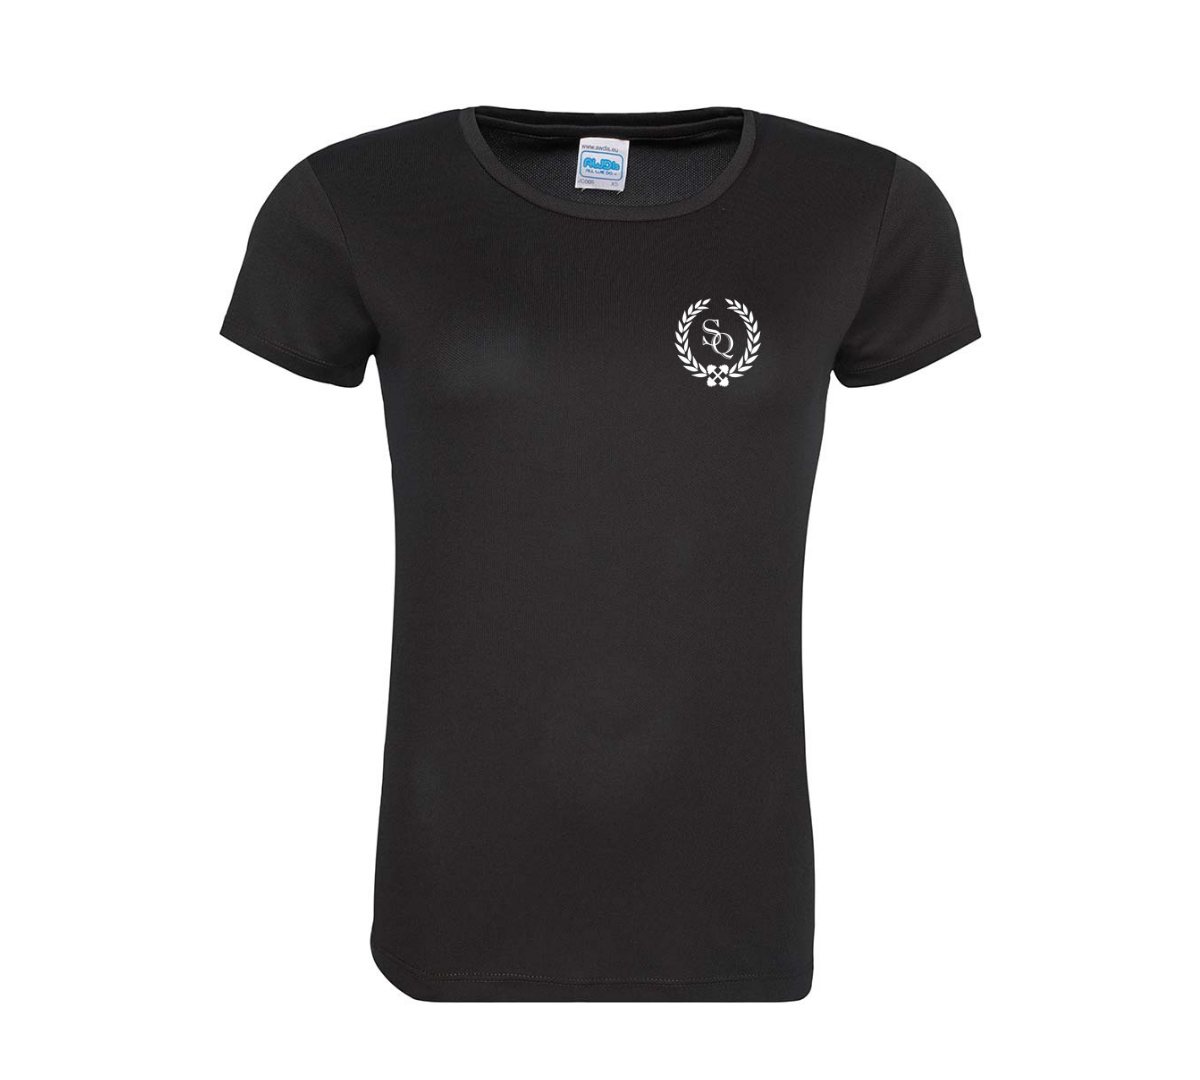 The Shredquarters Swansea Ladies Training T-Shirt